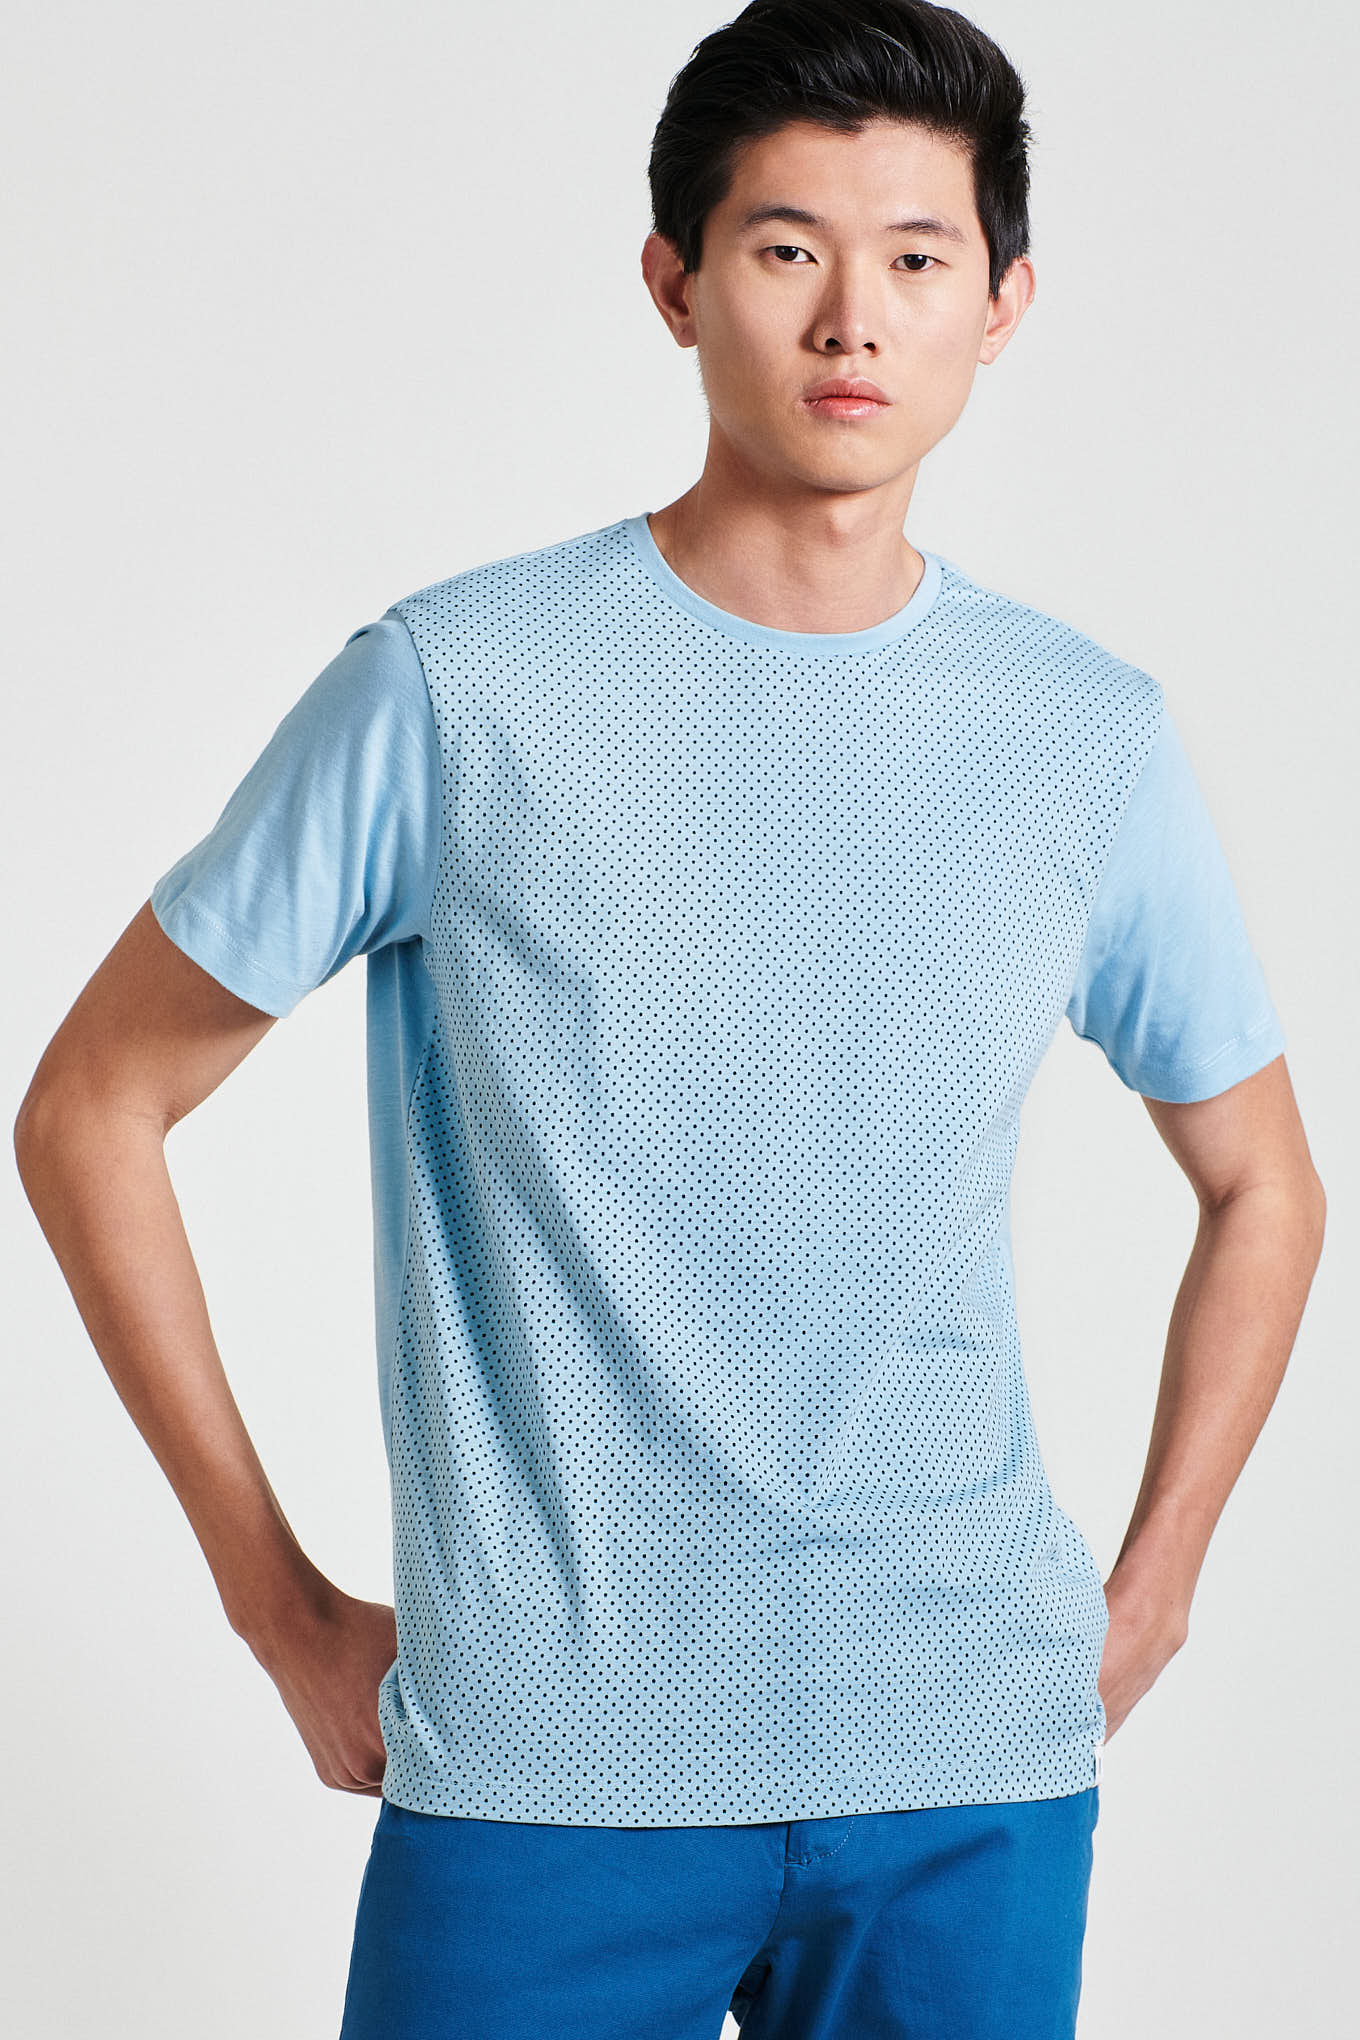 T-Shirt Azul Claro Casual Homem